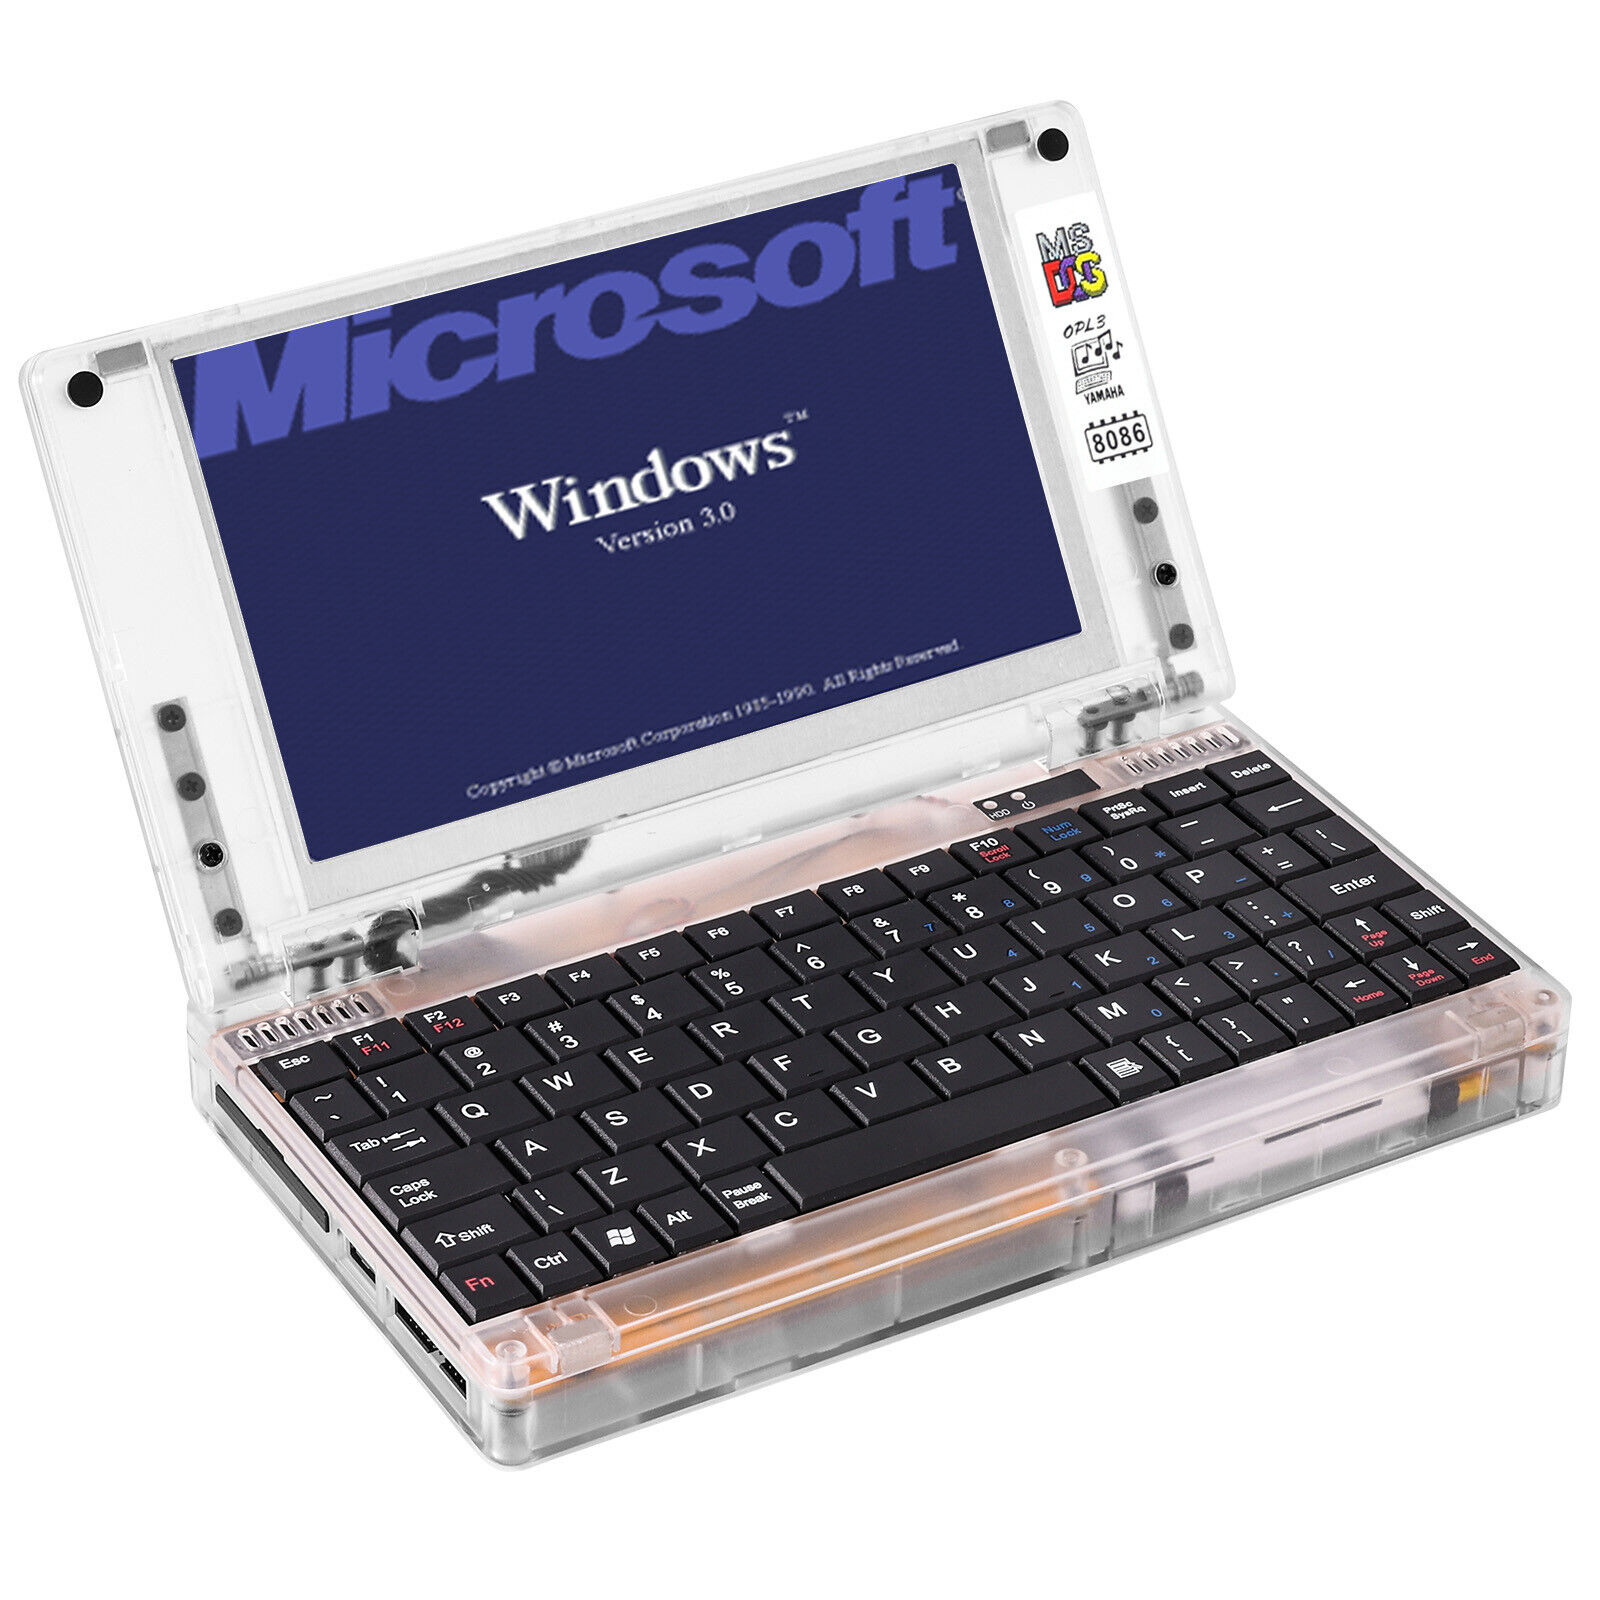 Retro Pocket8086 Windows3.1 CPU XT PC Laptop Computer 8088 LCD Screen Integrated